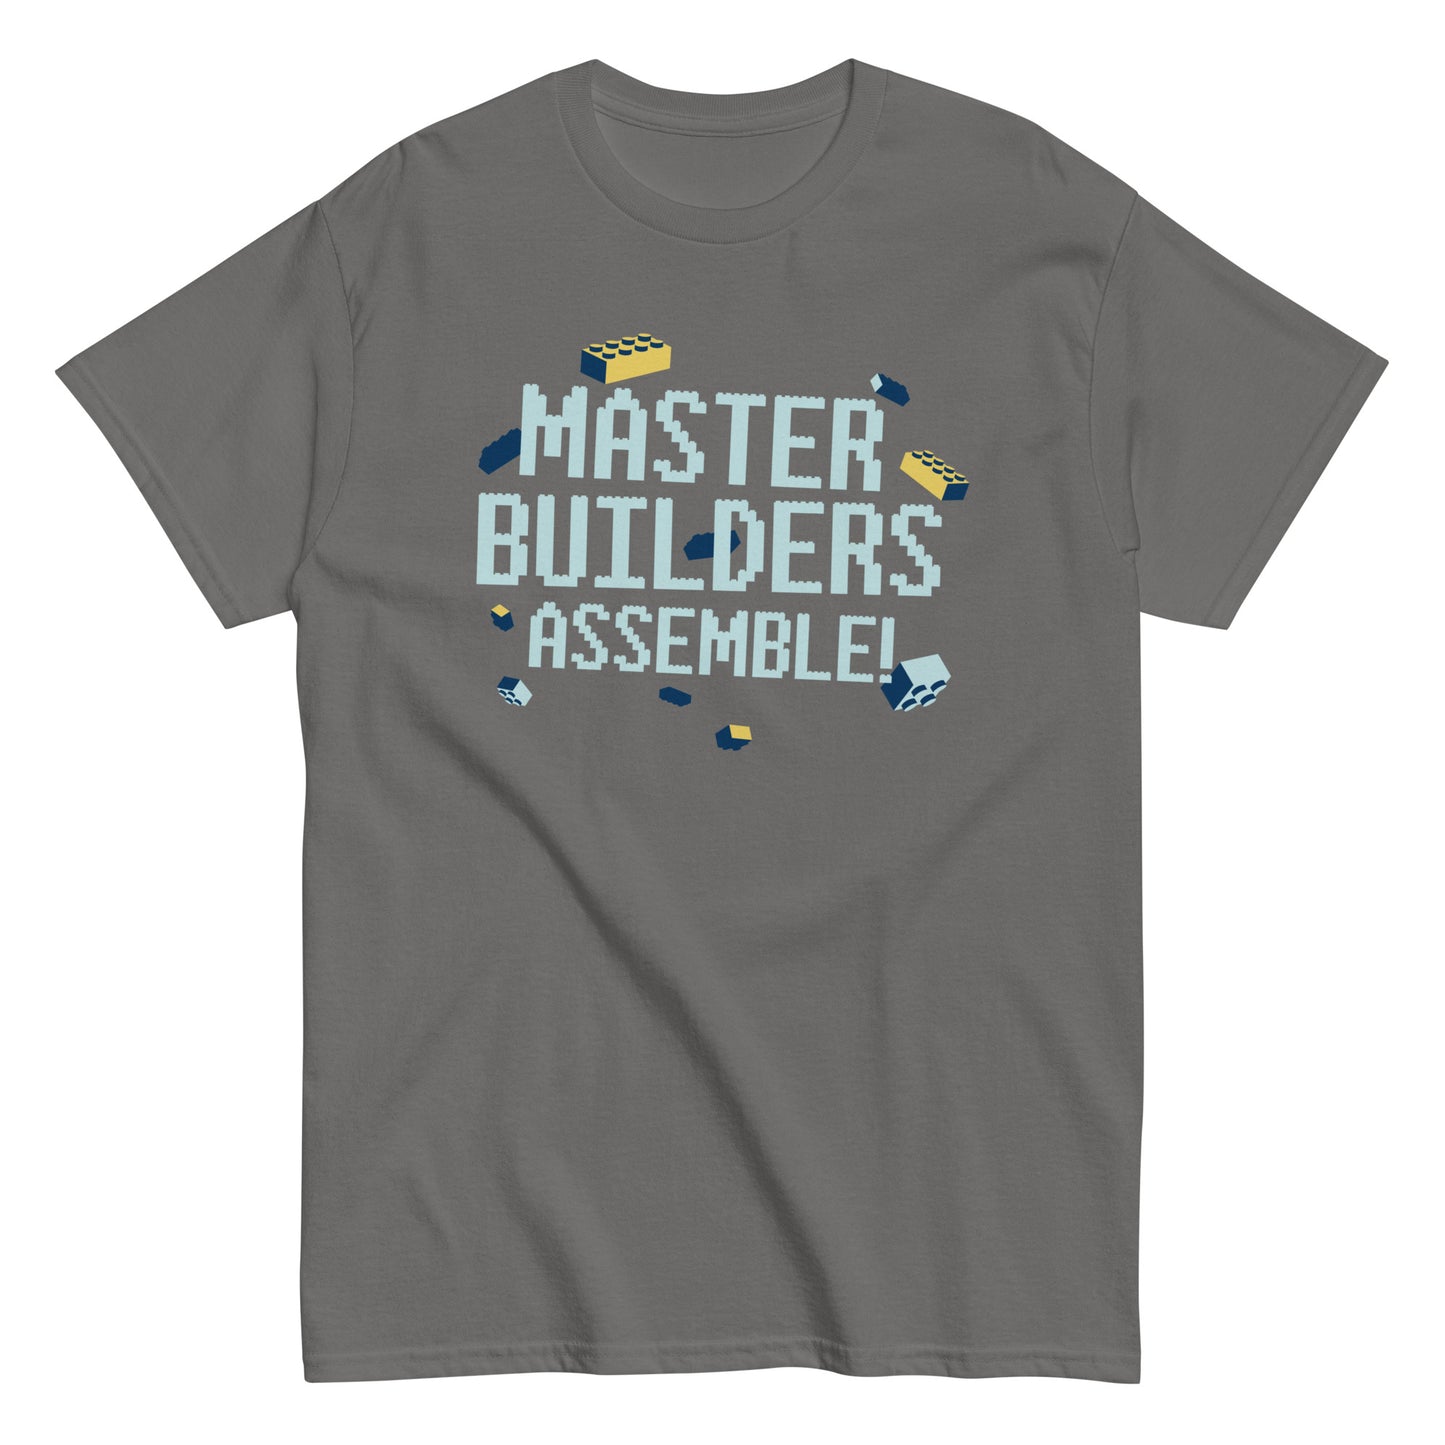 Master Builders Assemble! Men's Classic Tee